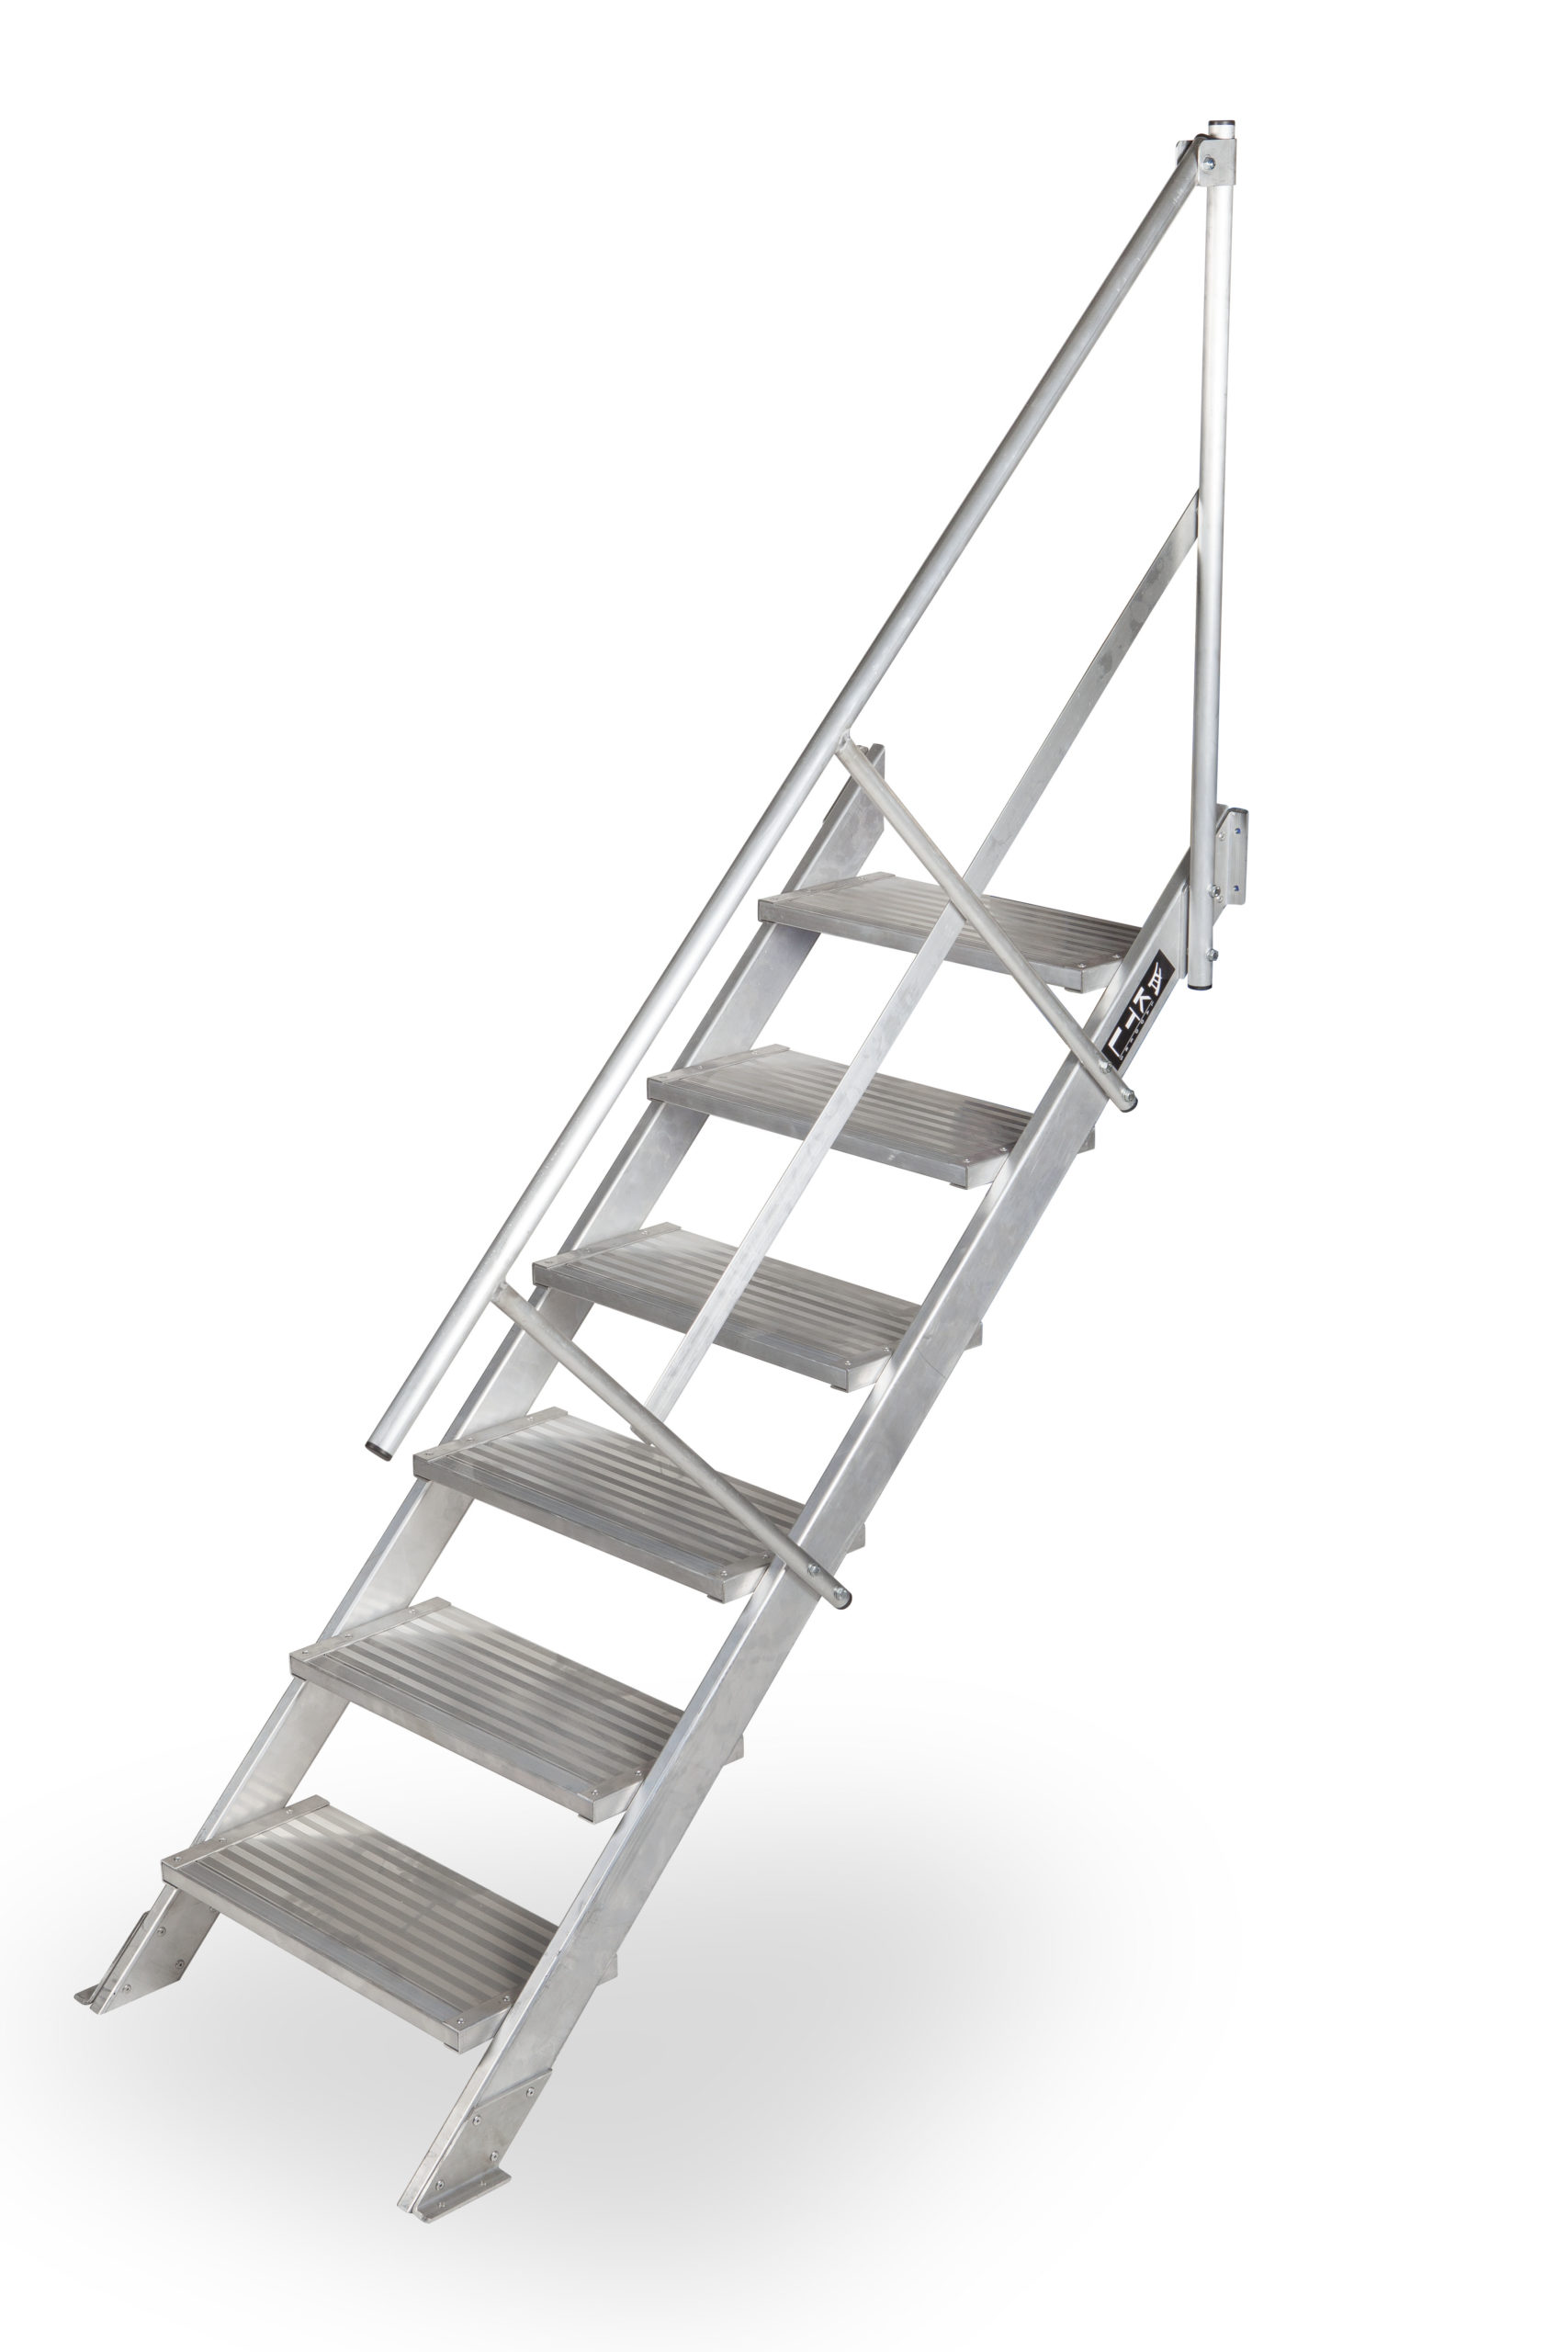 RE 102  Escalera escamoteable para pared en acero galvanizado – Lecasa  Profesional – Venta de productos a profesionales